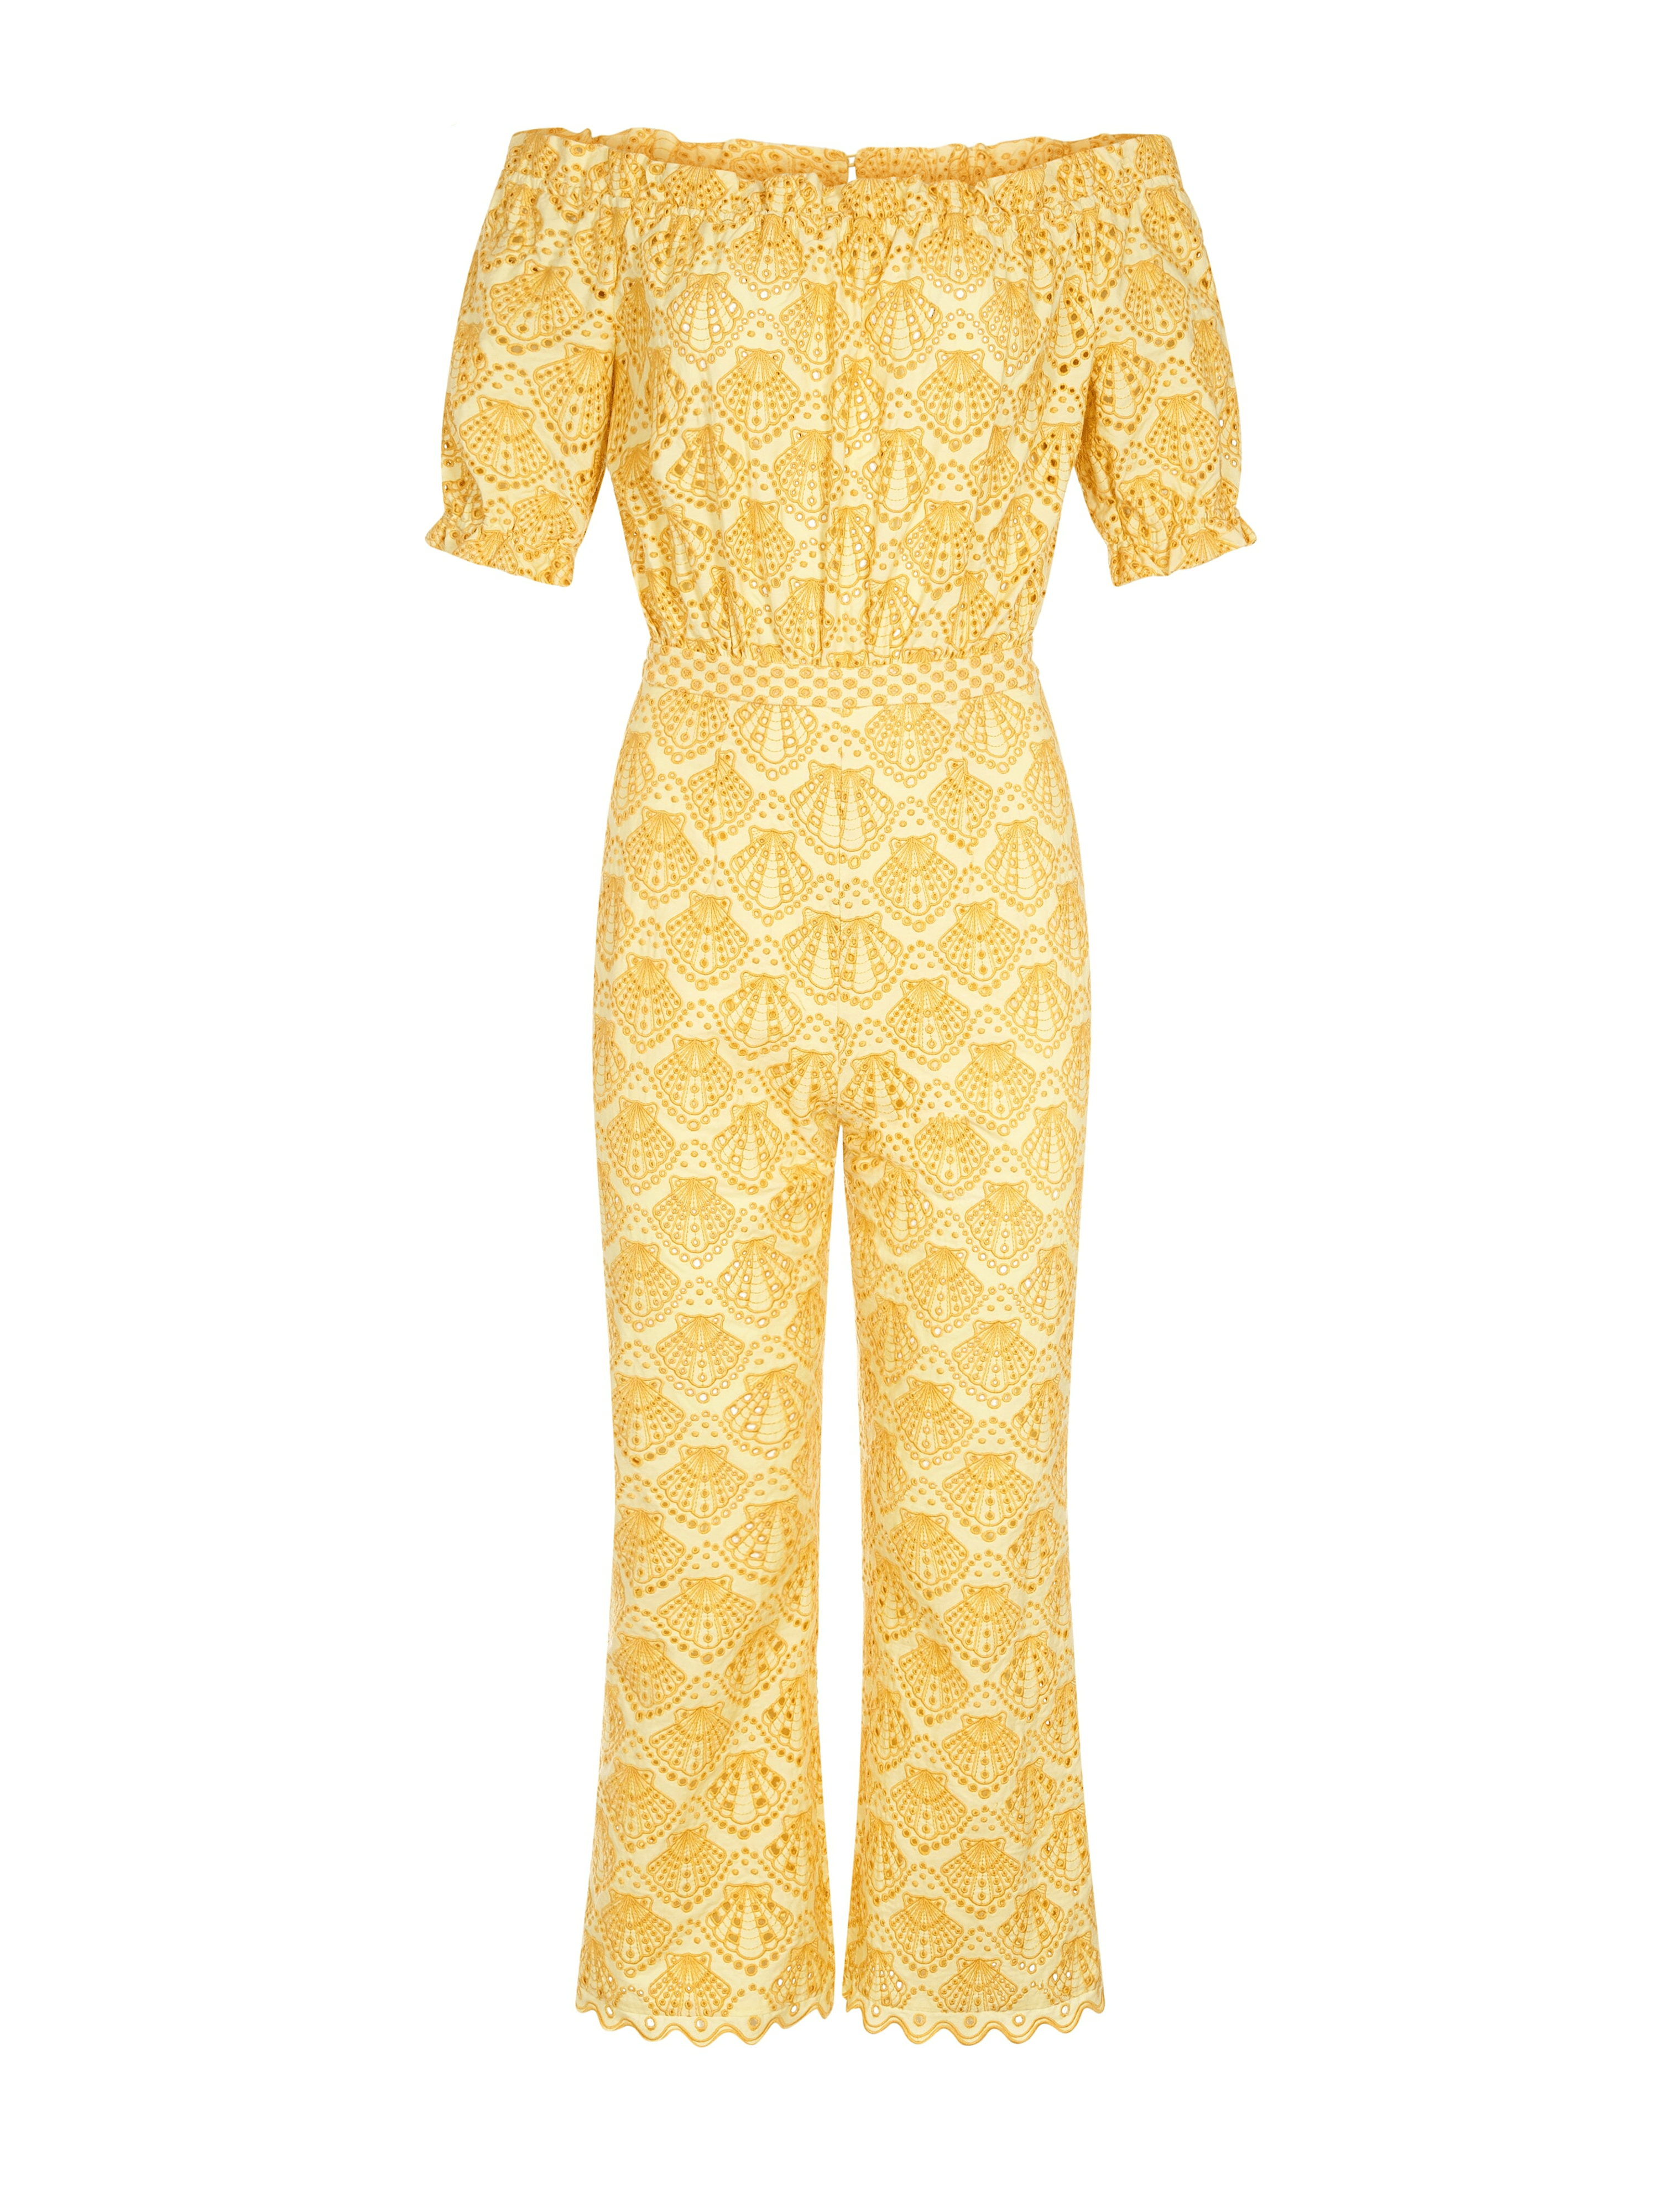 Juli Cotton Jumpsuit in Lemonade Yellow